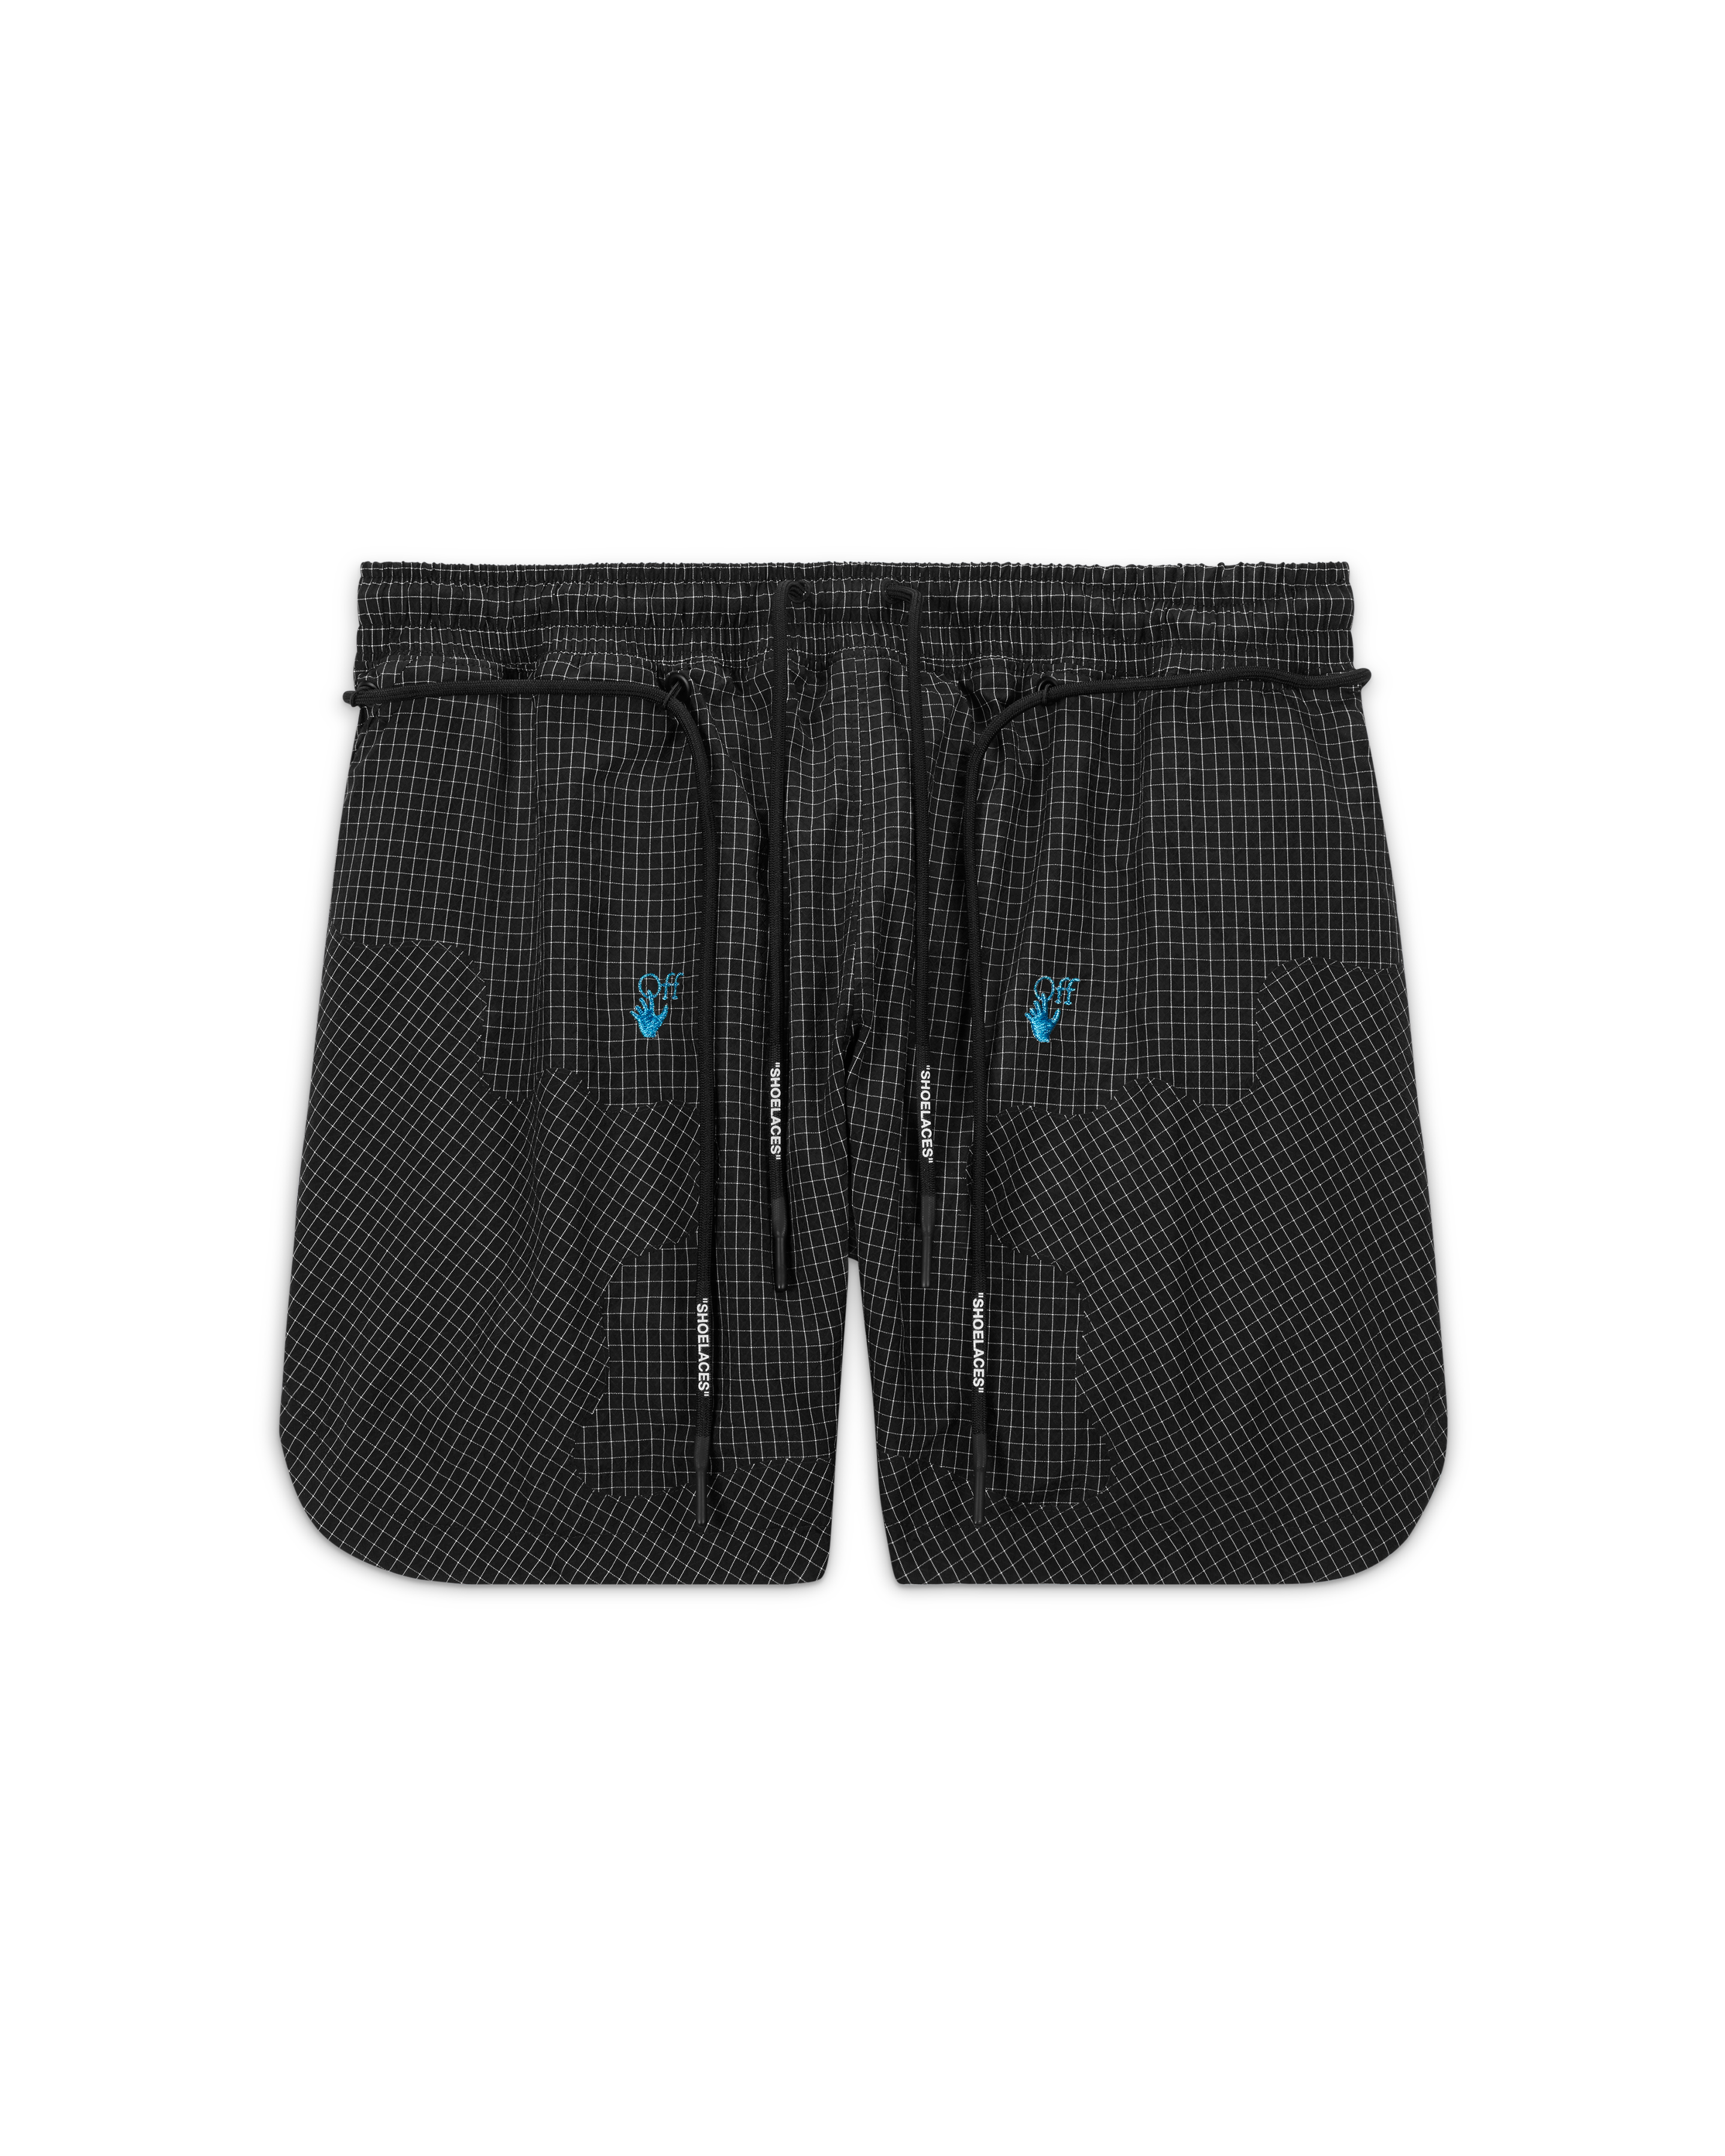 Nike x Off-White™️ Woven Short (Black)